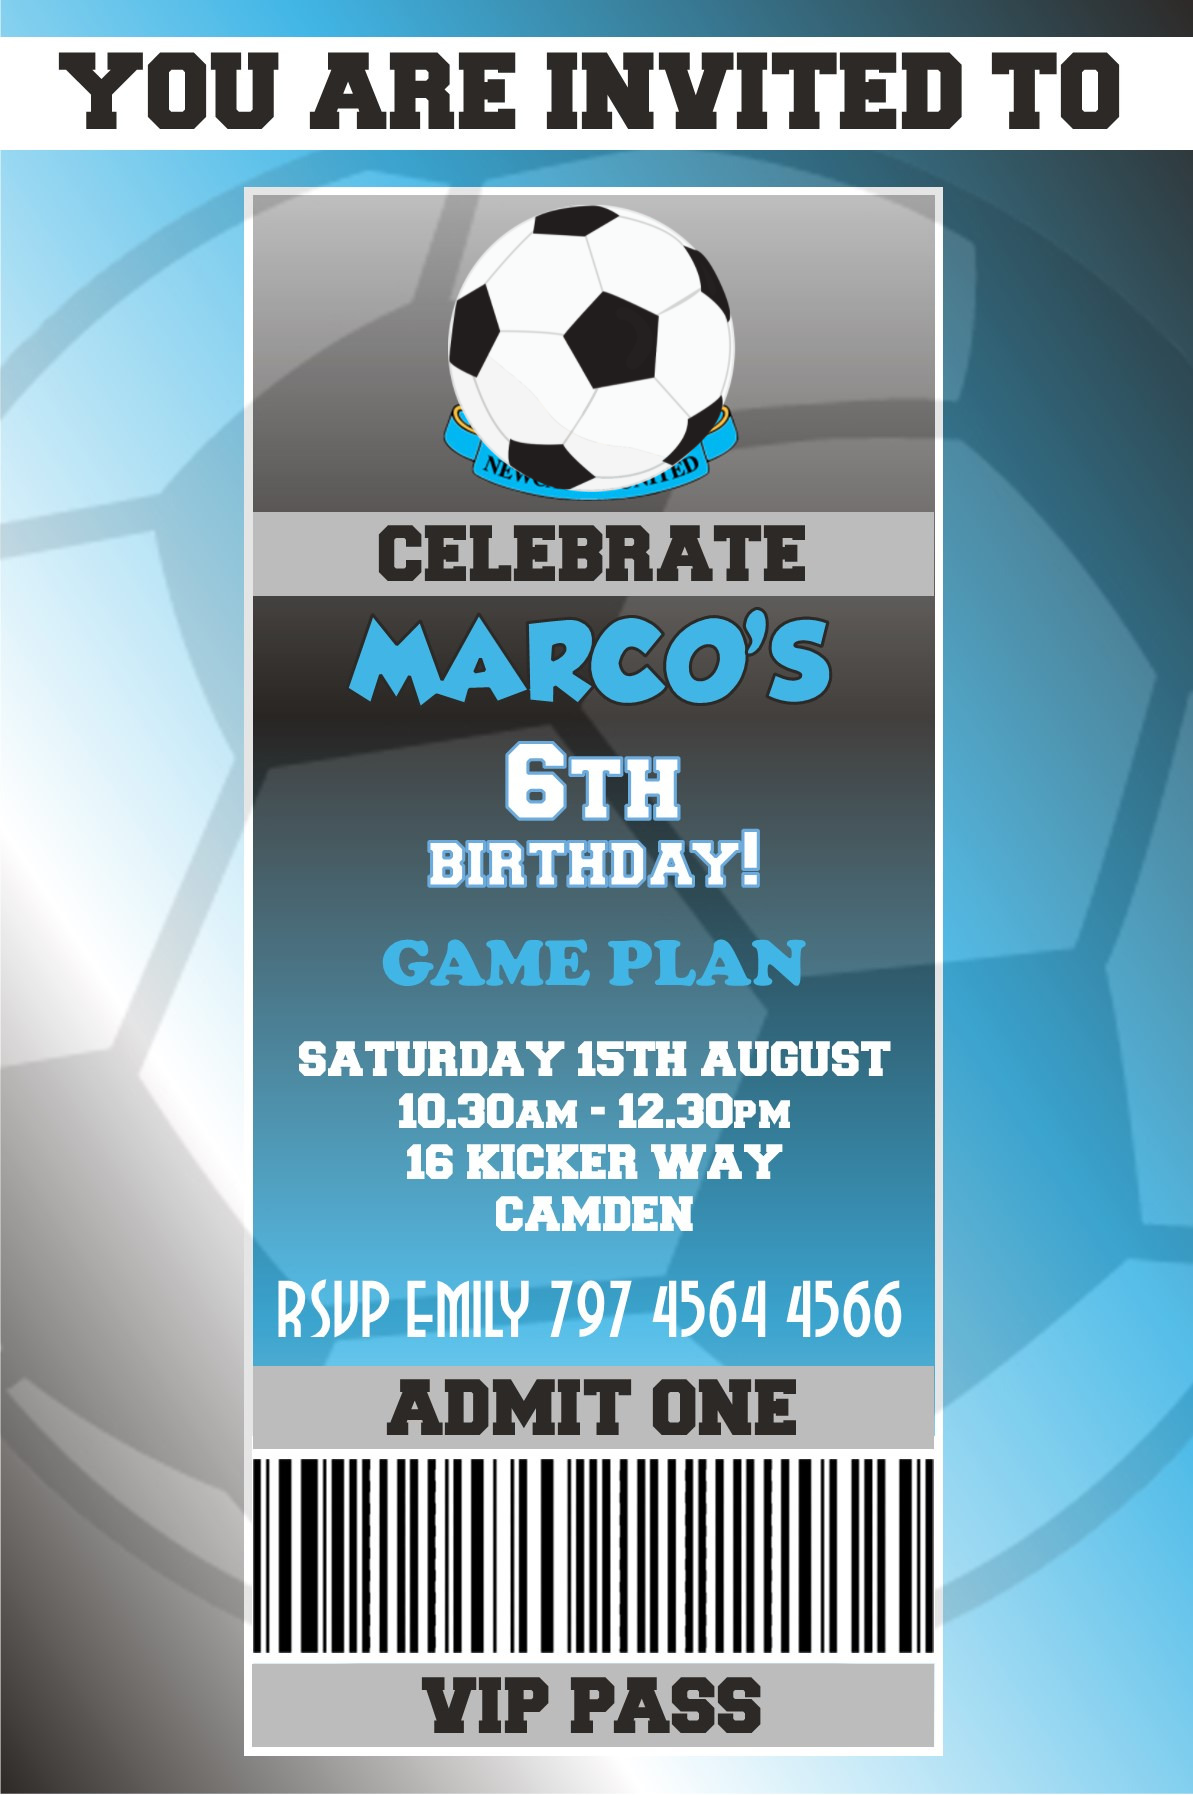 Newcastle United themed Birthday Invitation